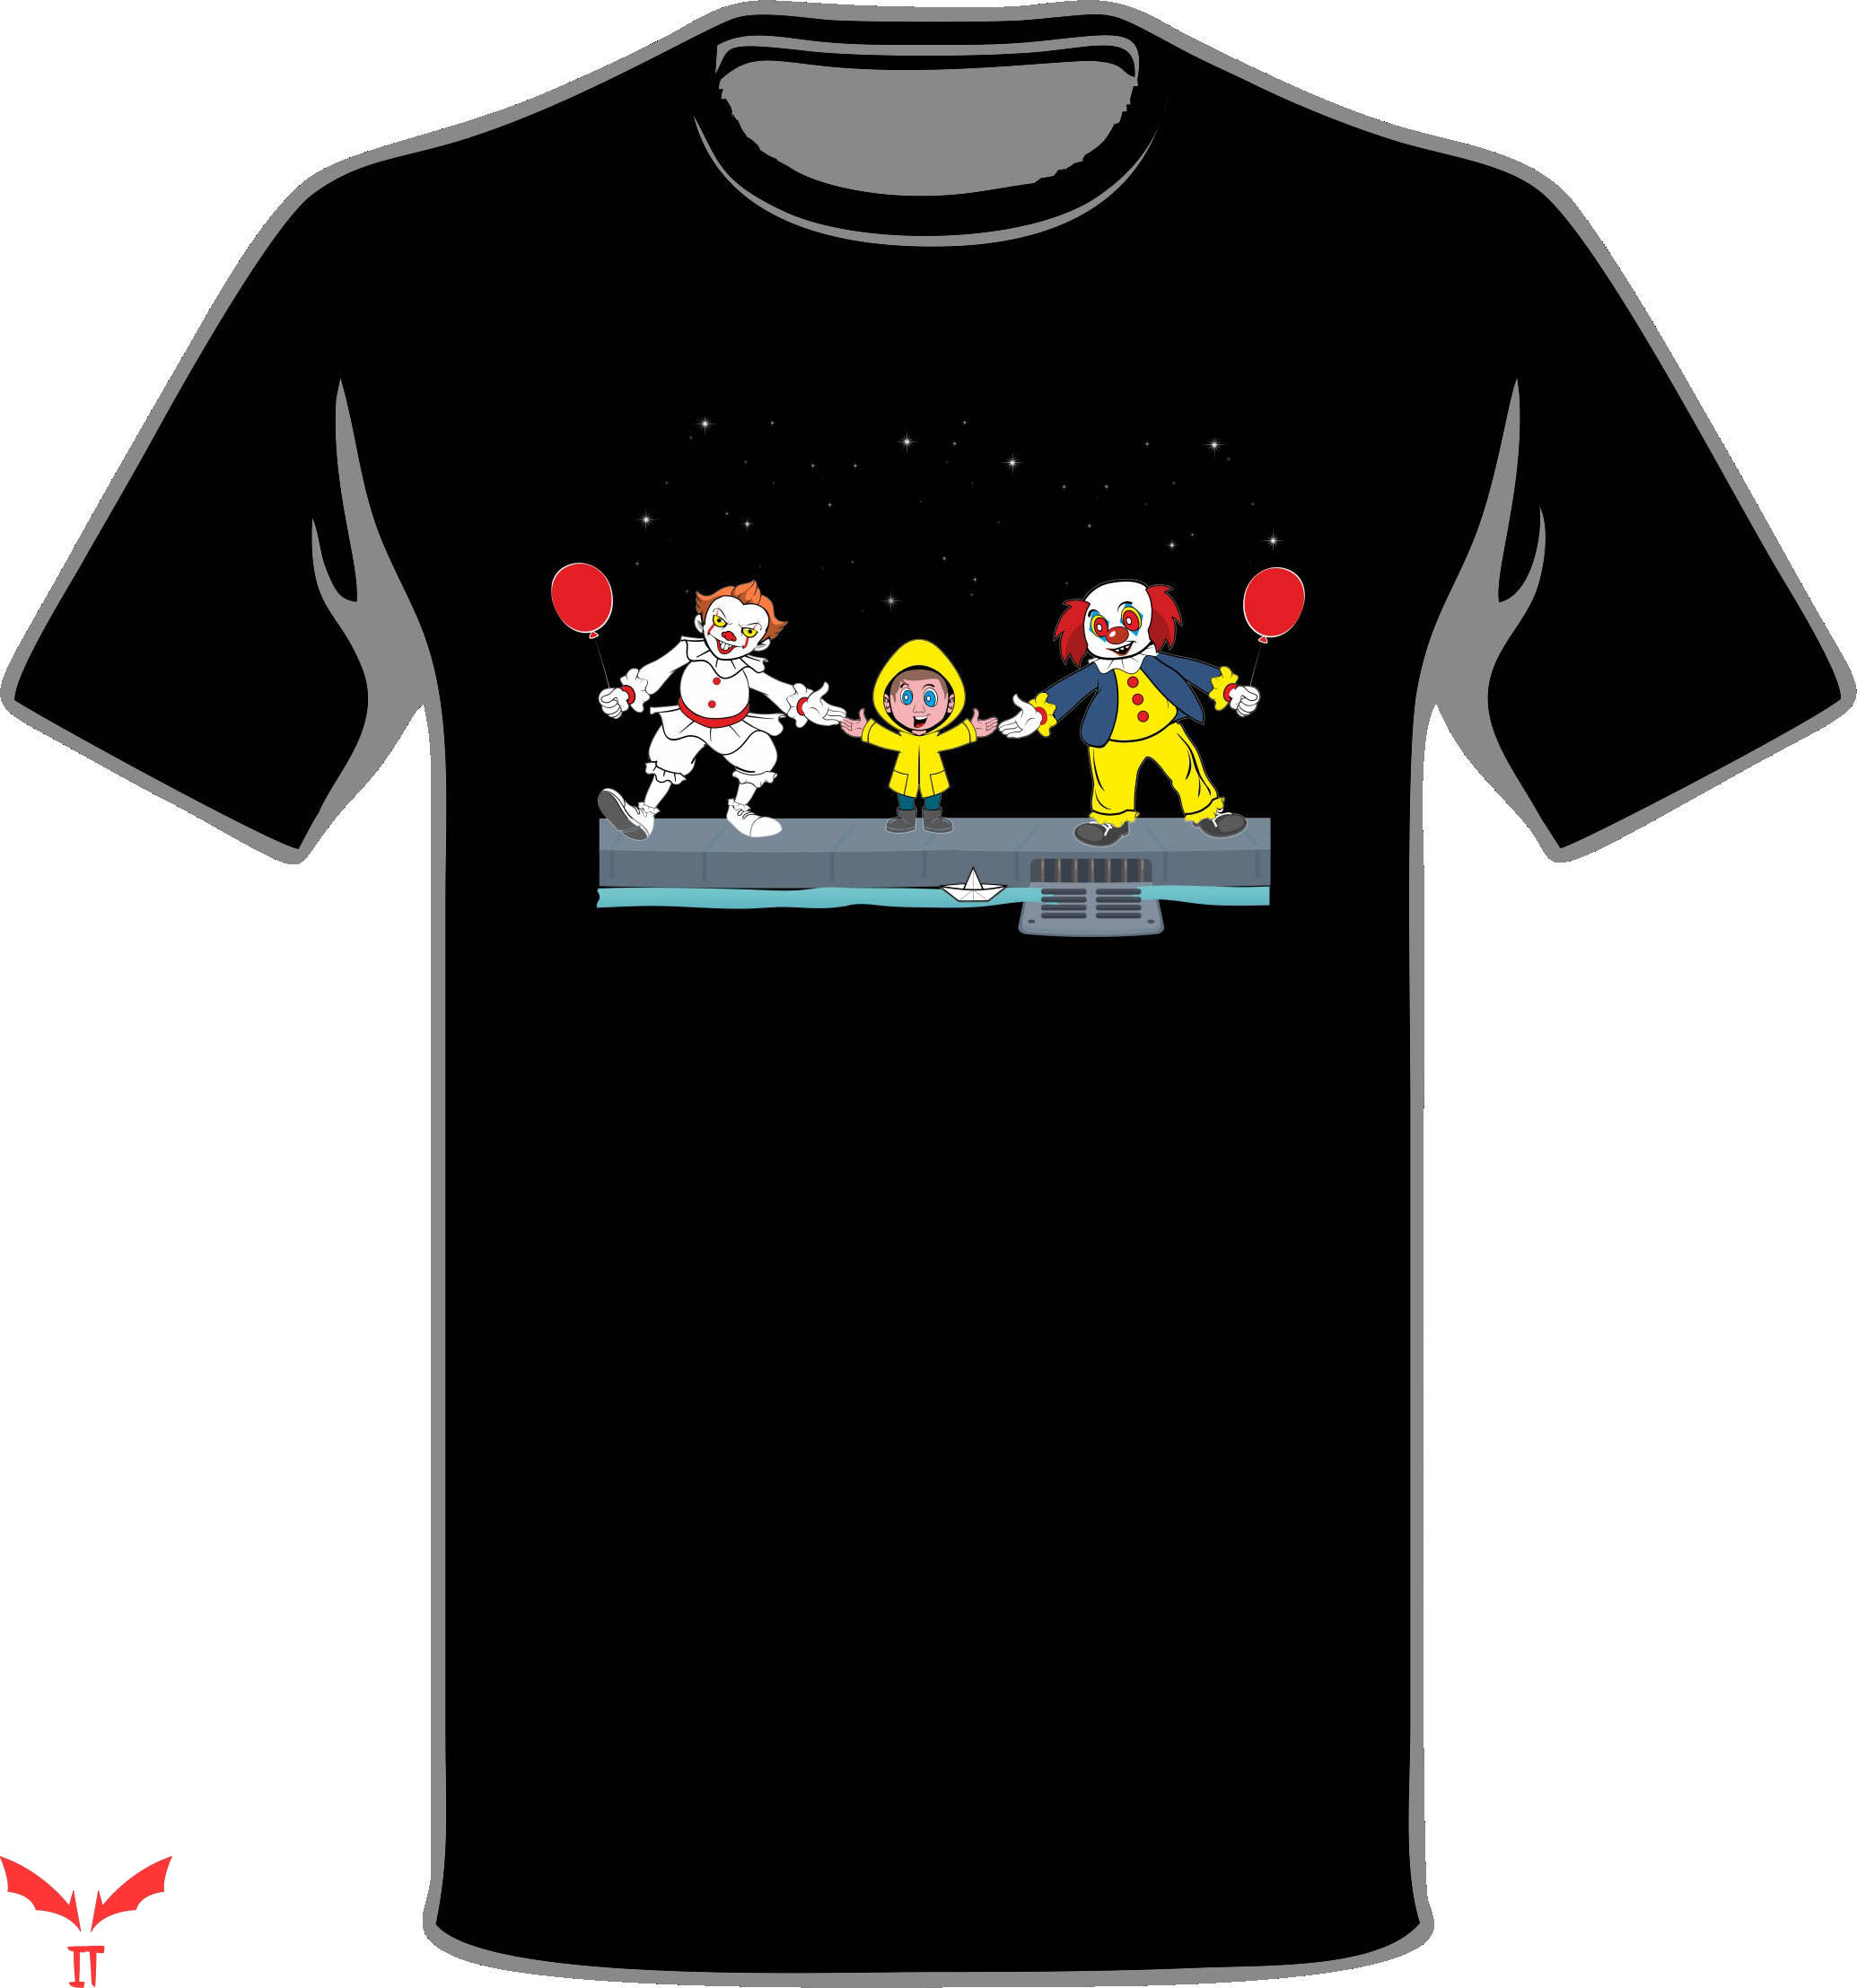 IT The Clown T-Shirt Georgie With Clown In Cartoon Form